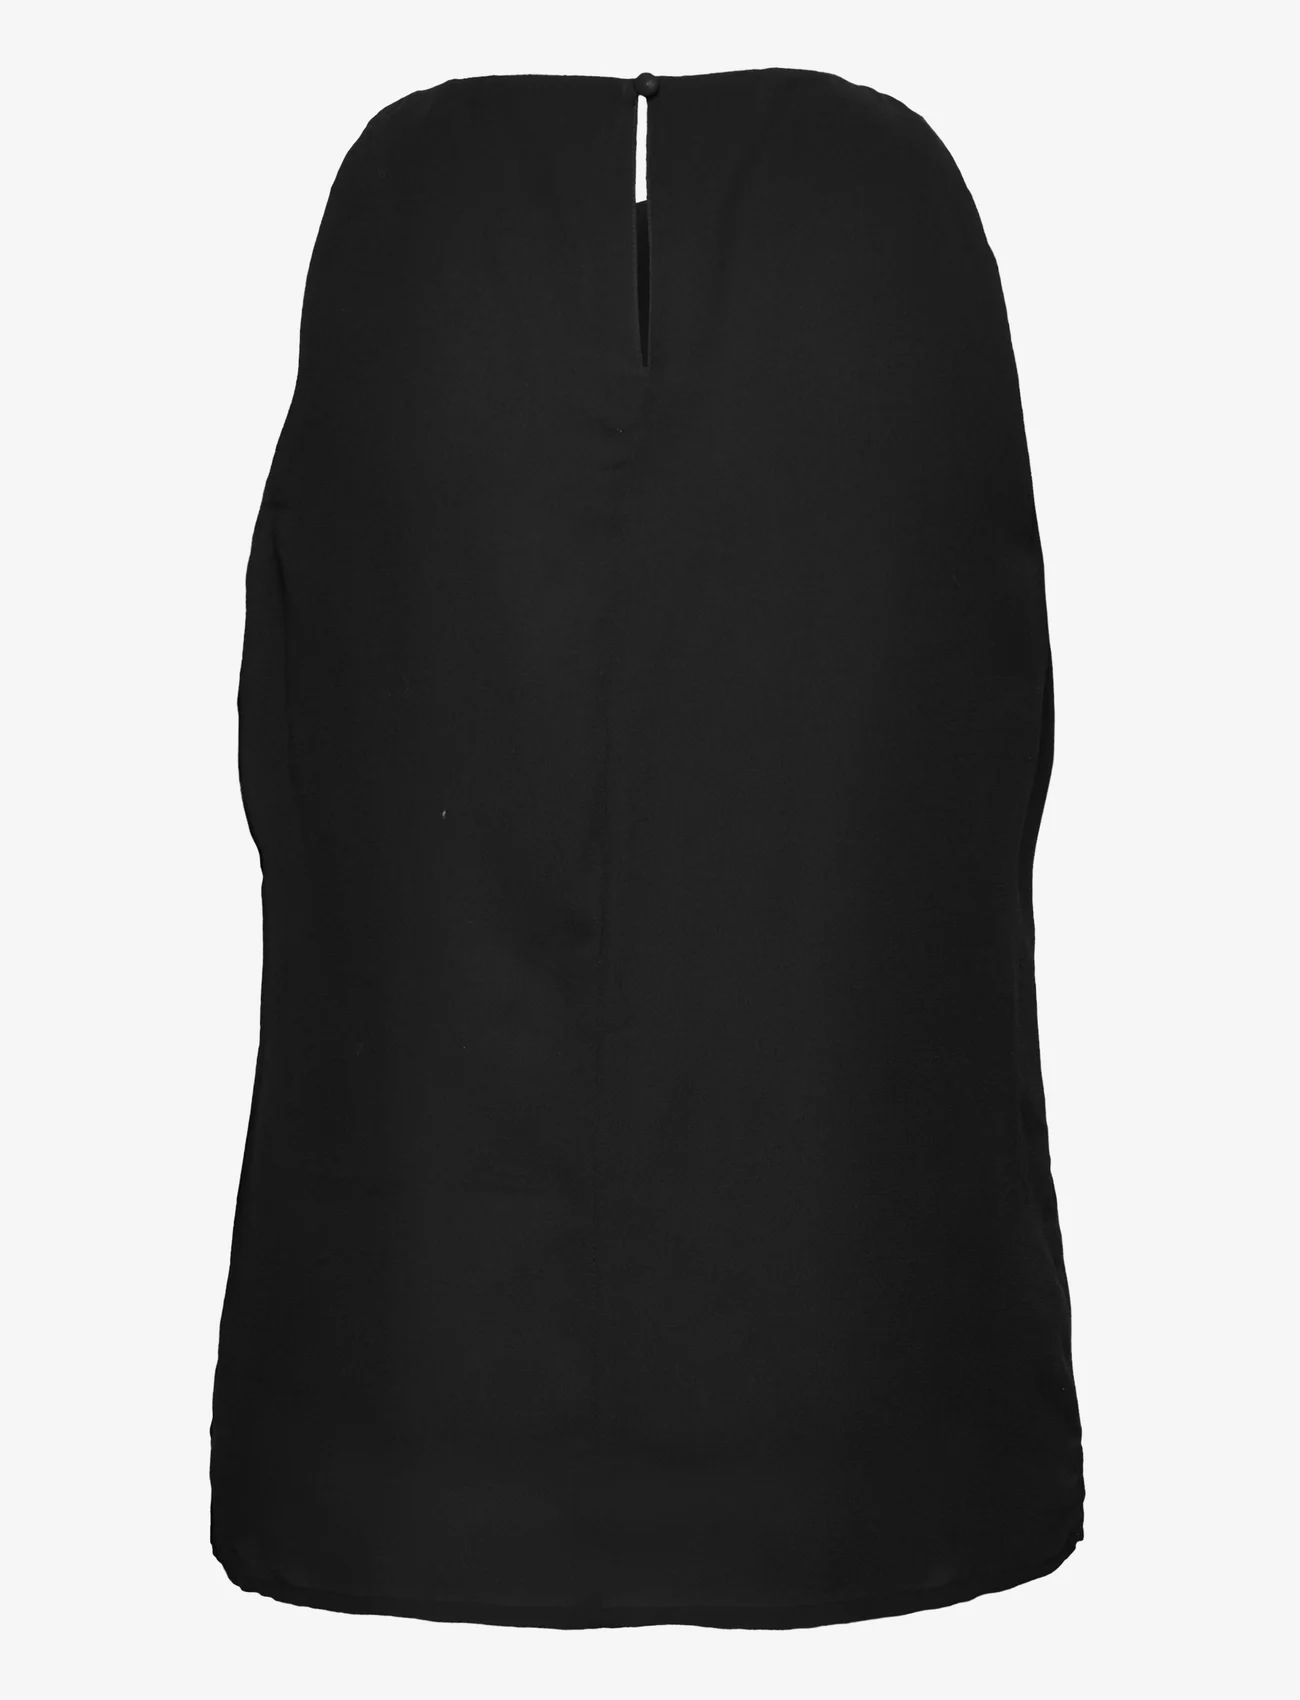 Esprit Casual - Blouses woven - Ärmellose tops - black - 1